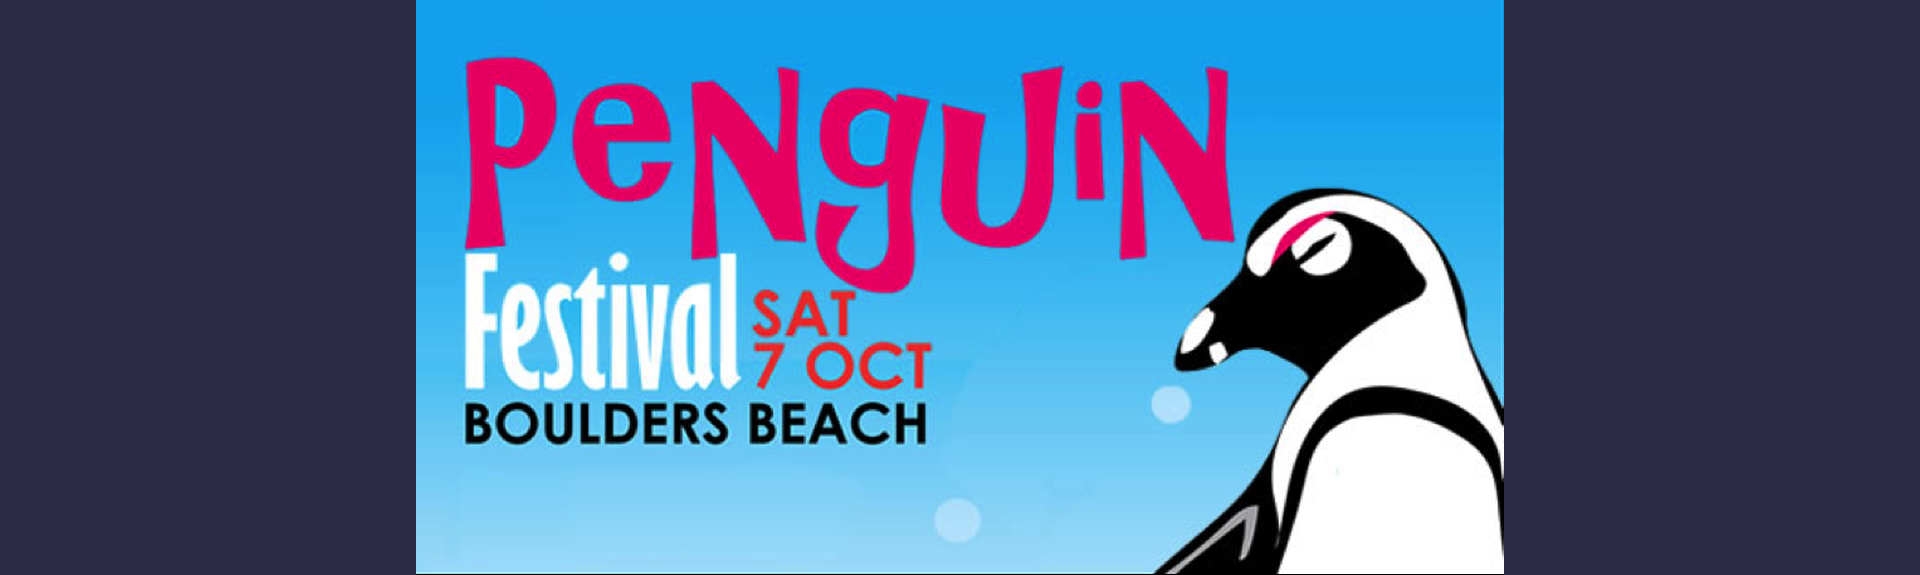 Penguin Festival - Seaforth Beach - Simon's Town - Cape Town